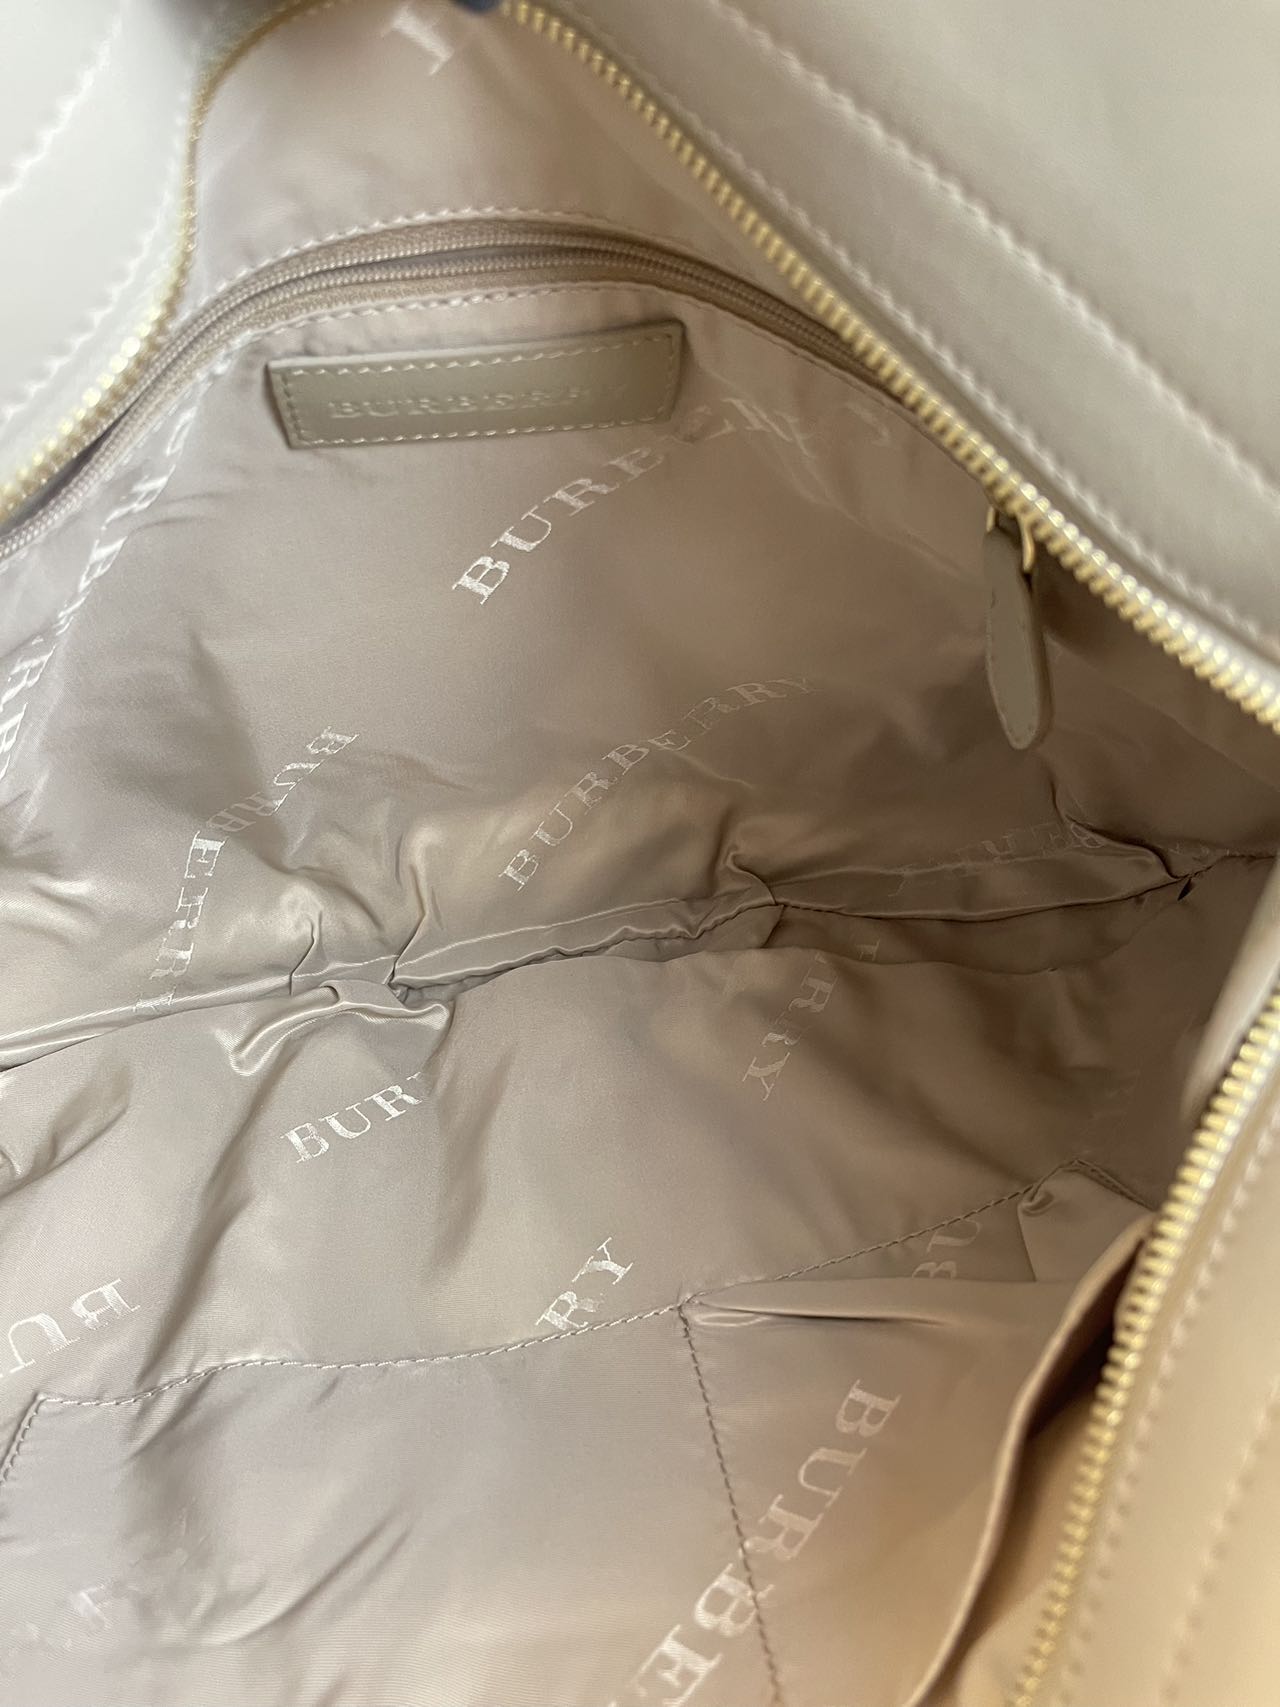 Preloved Burberry Leather Totes Shoulder Bag with Stud